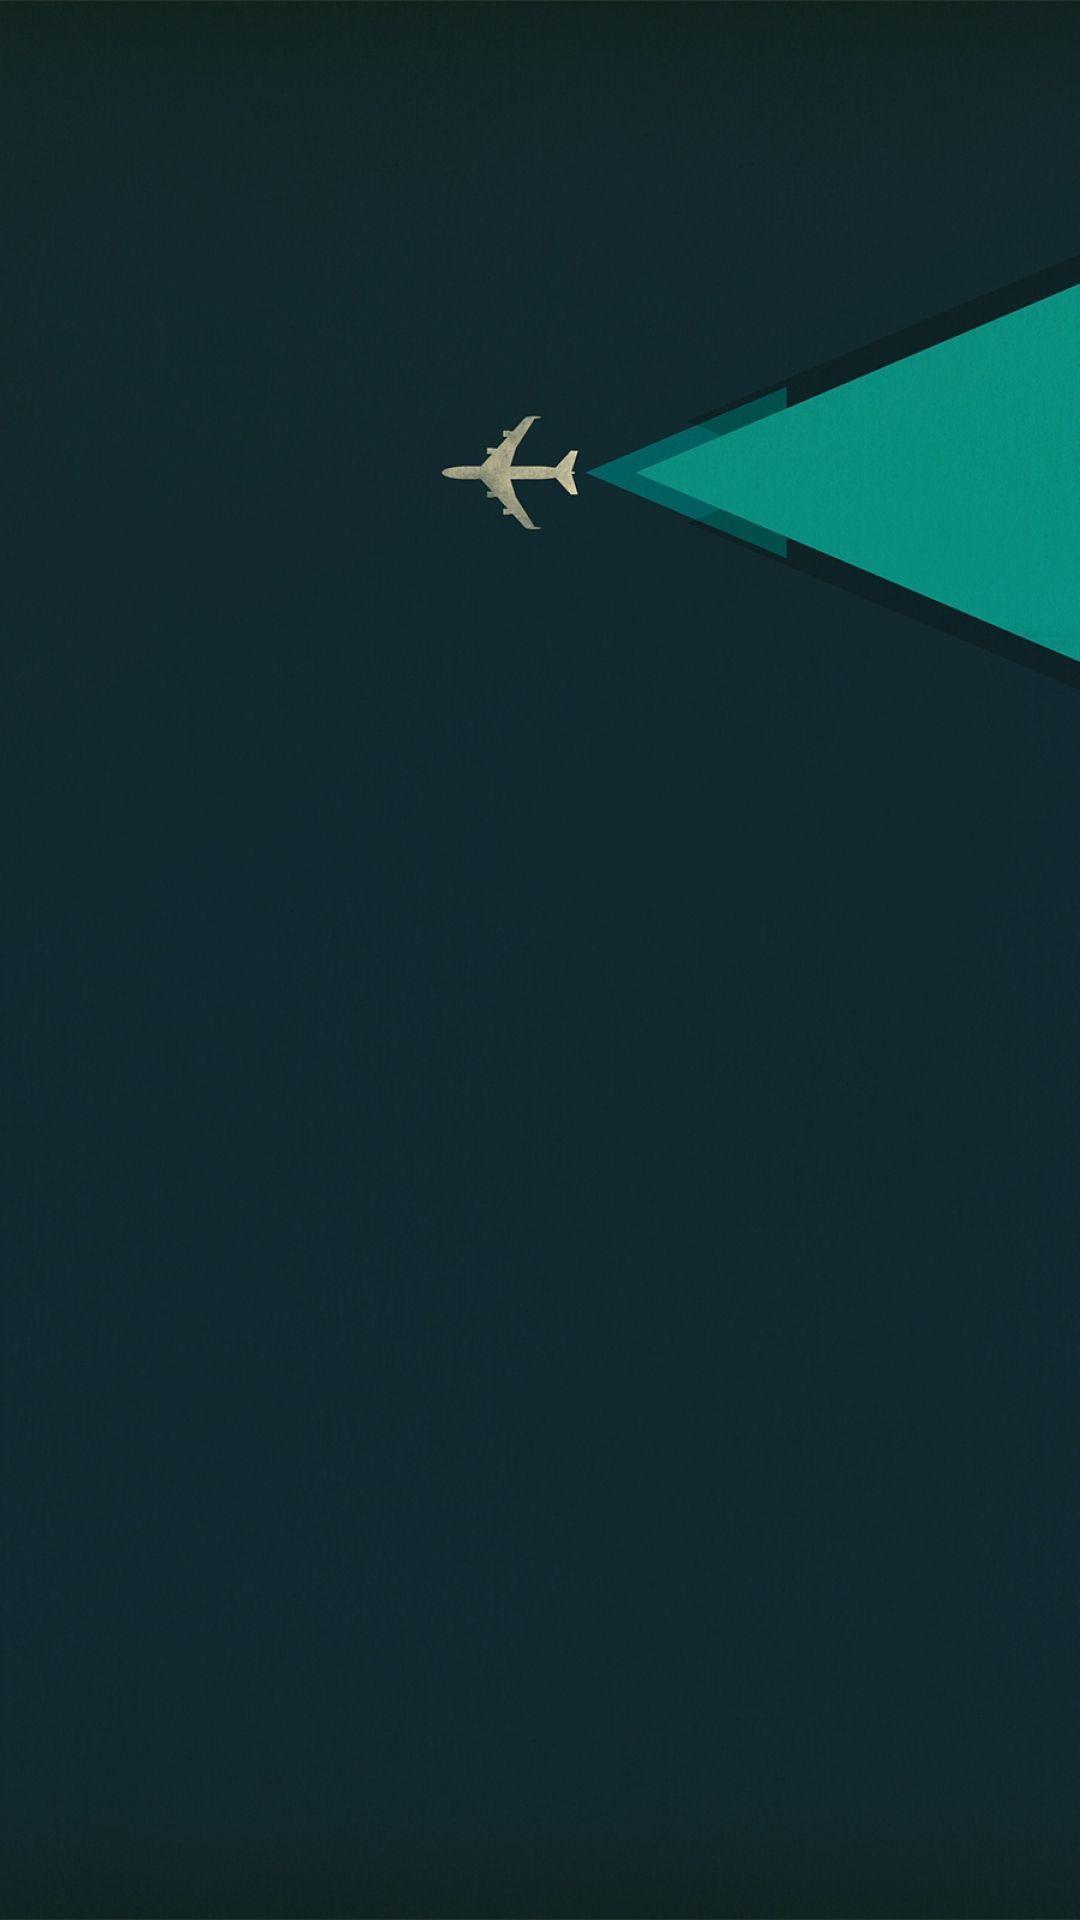 Plane Minimalist Image. Minimal wallpaper, Minimalist iphone, iPhone minimalist wallpaper